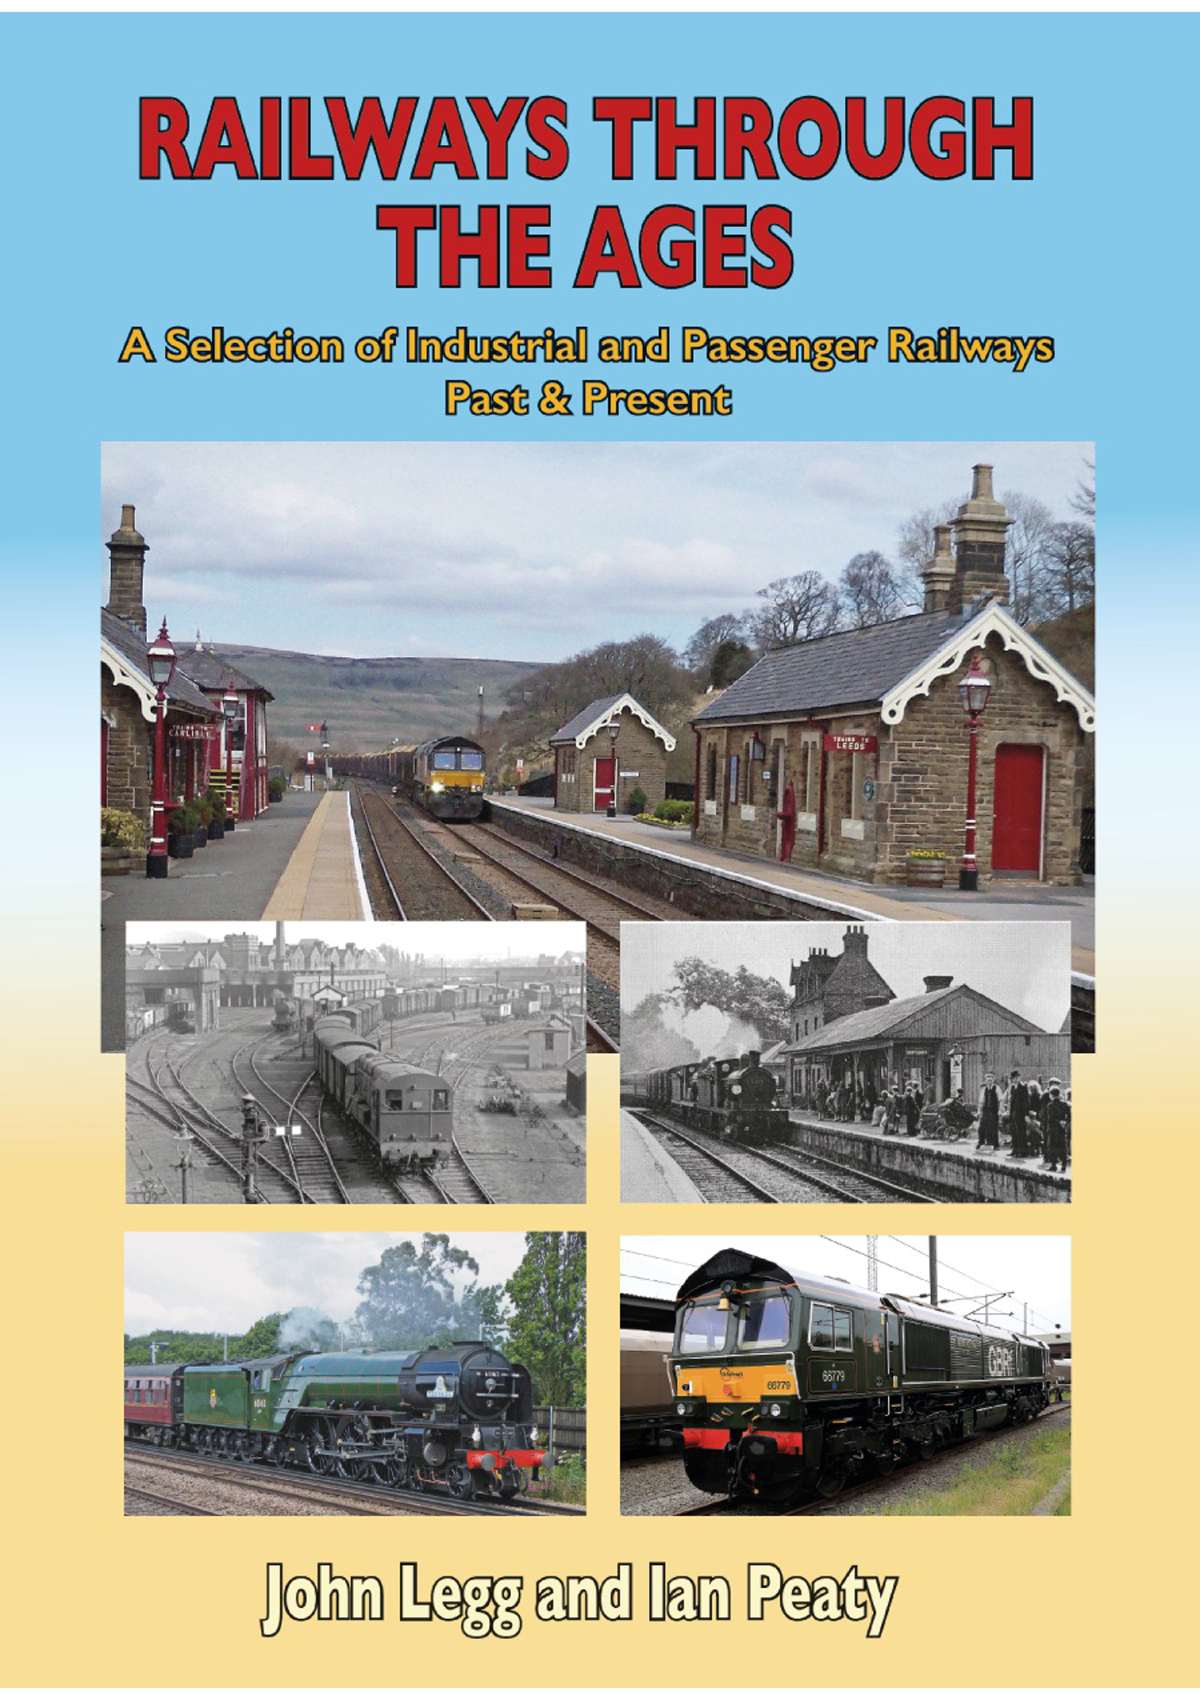 5973 - PRE - SALE Railways Through the Ages